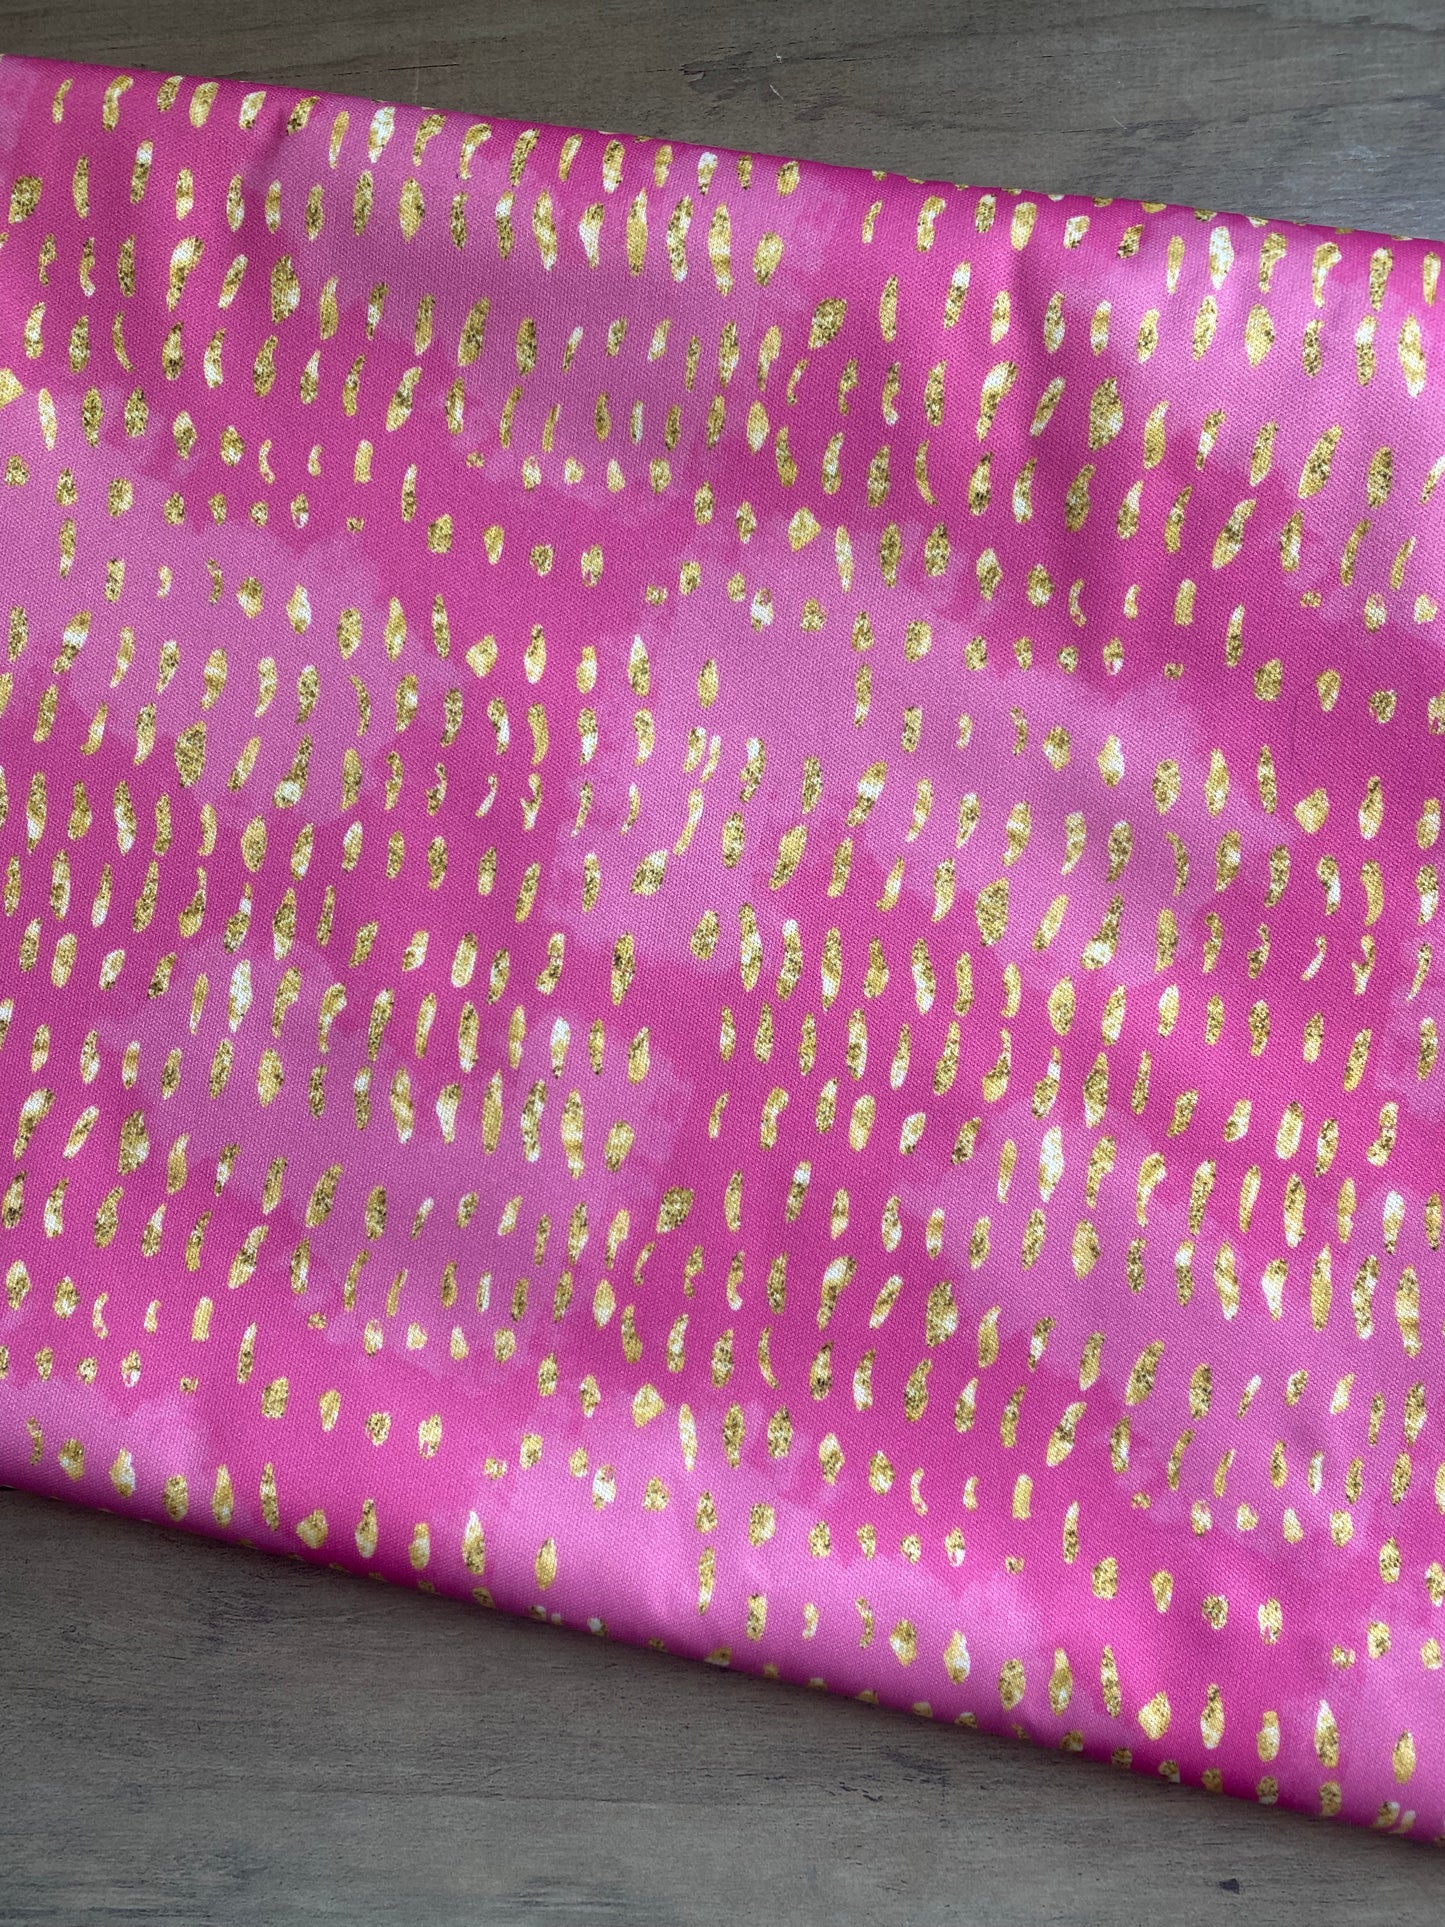 Pink and Gold Foil Wet Bag